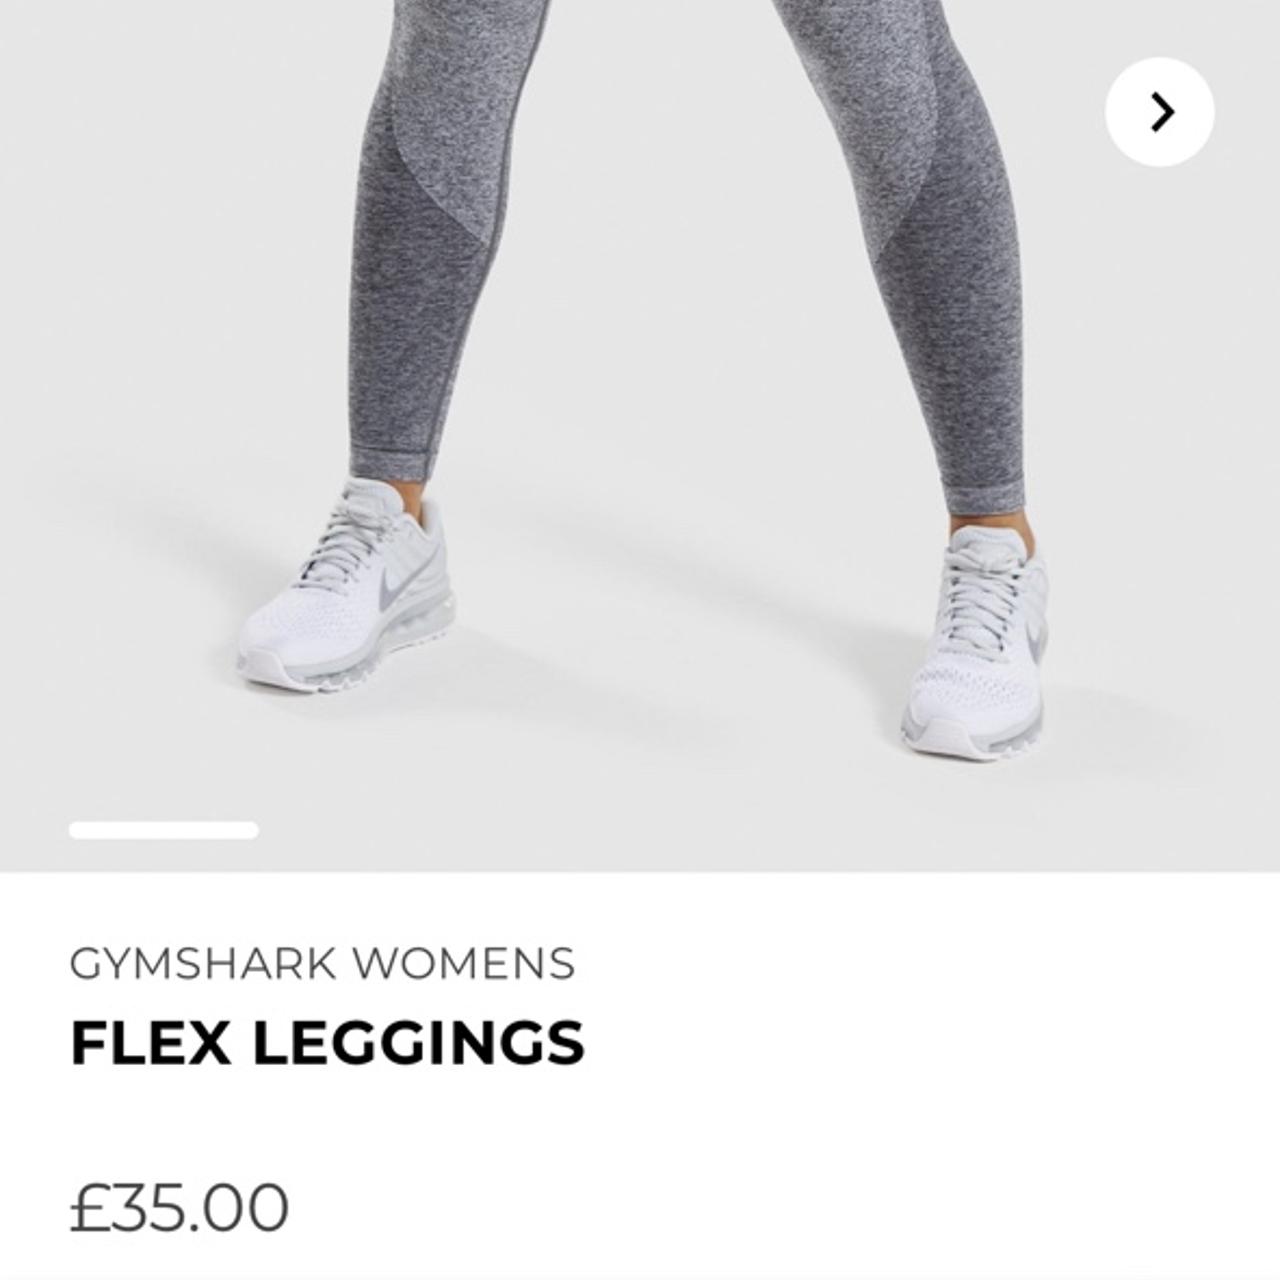 Gymshark flex leggings - CHARCOAL MARL/DUSKY TEAL 